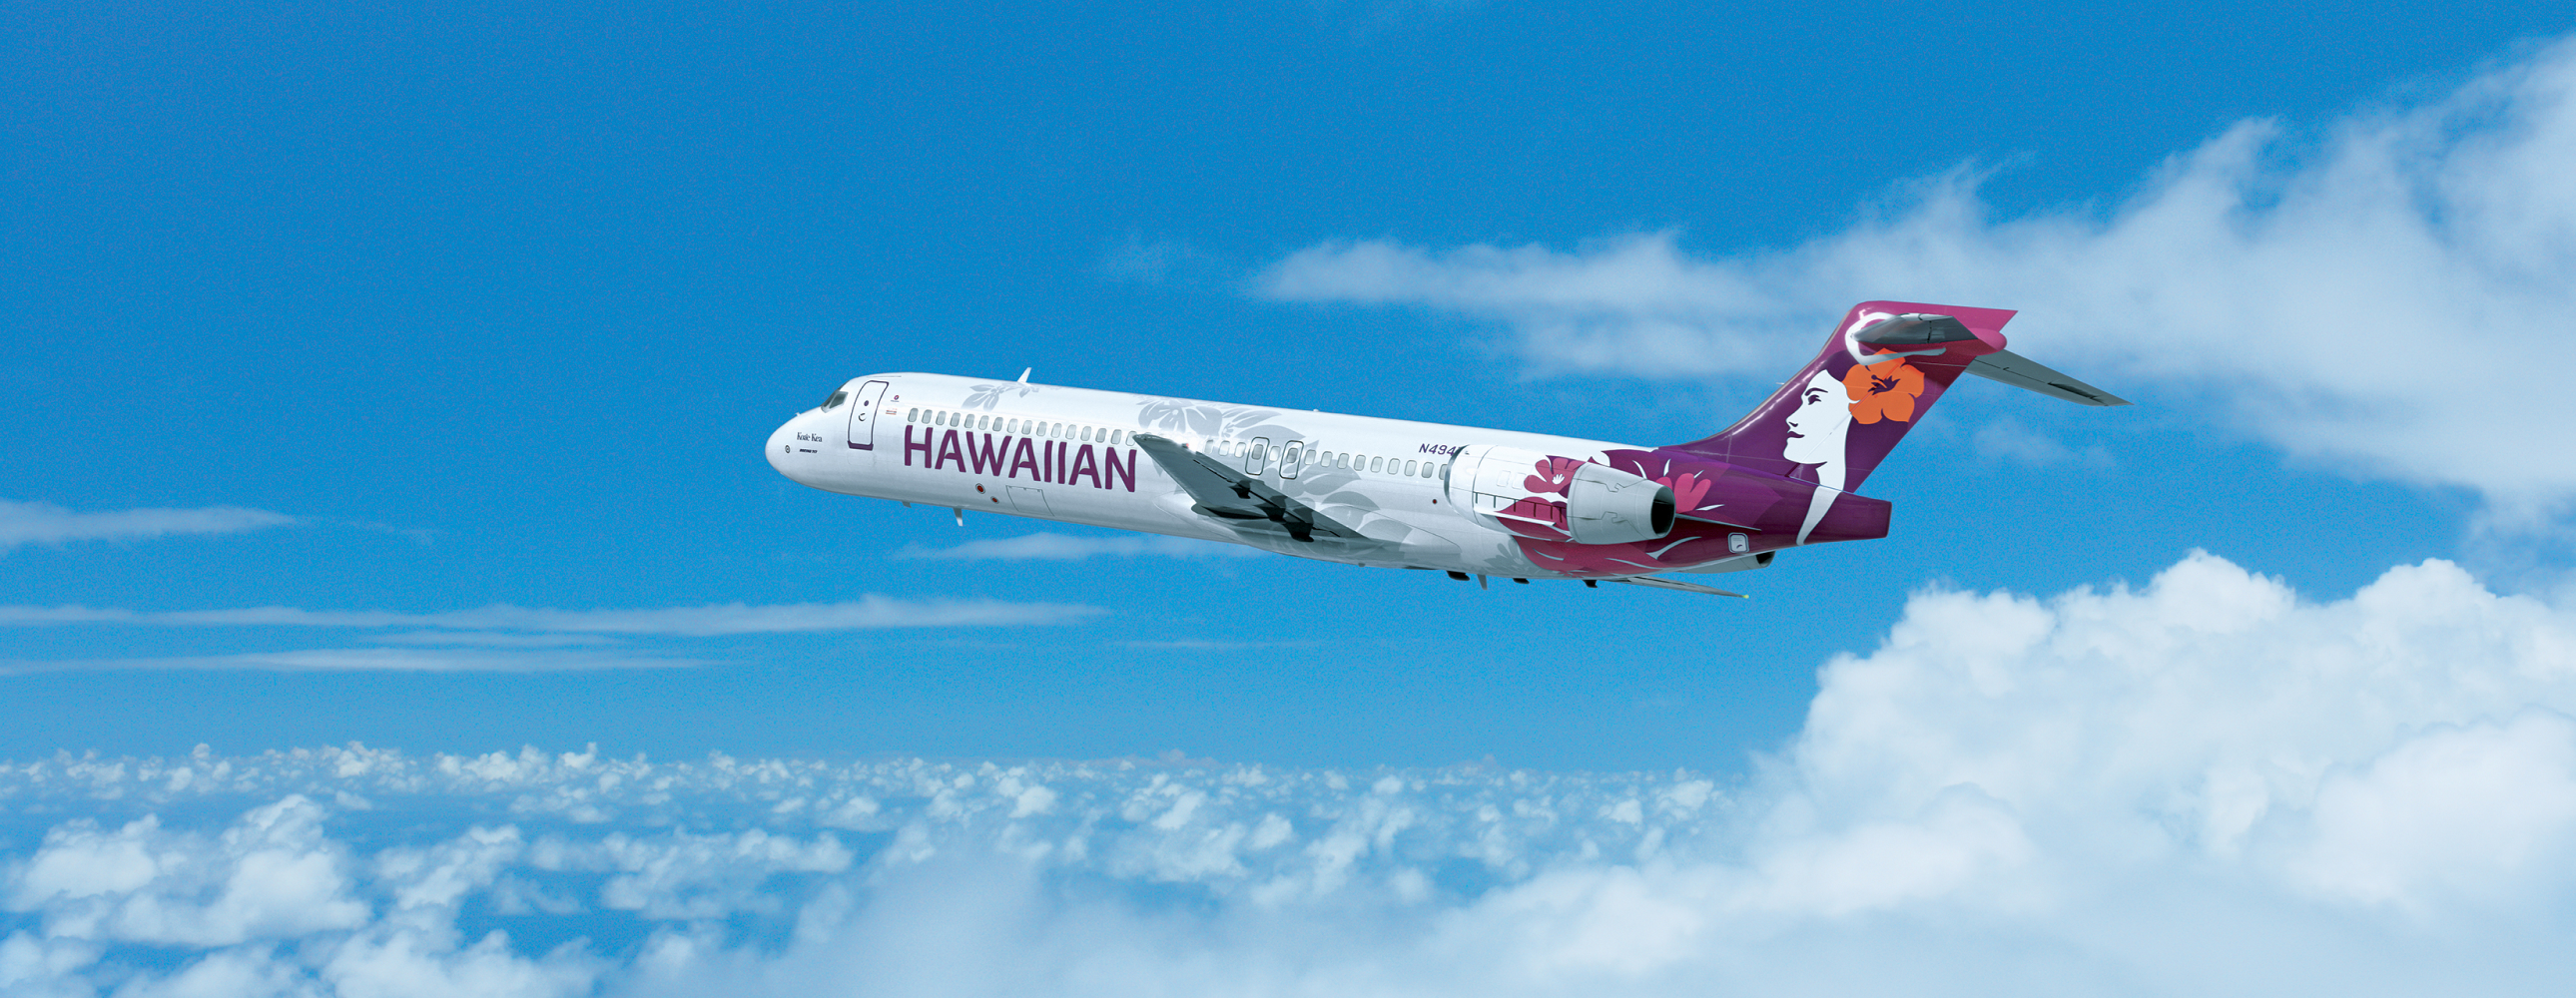 Boeing B717 Hawaiian Airlines